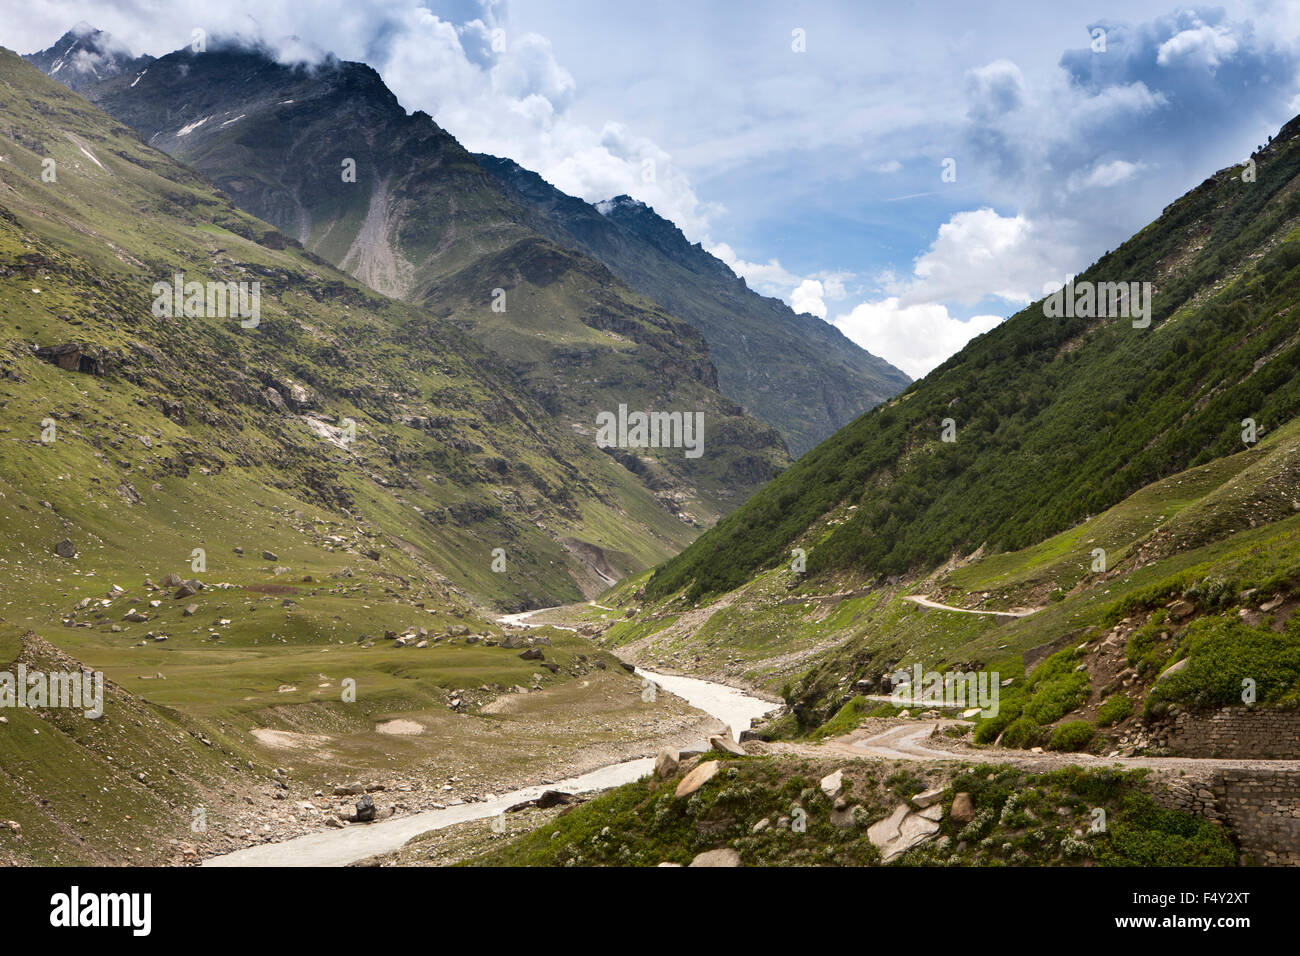 India, Himachal Pradesh, Lahaul Valley, Chhatru, Chandra River, road to Spiti through rocky landscape Stock Photo